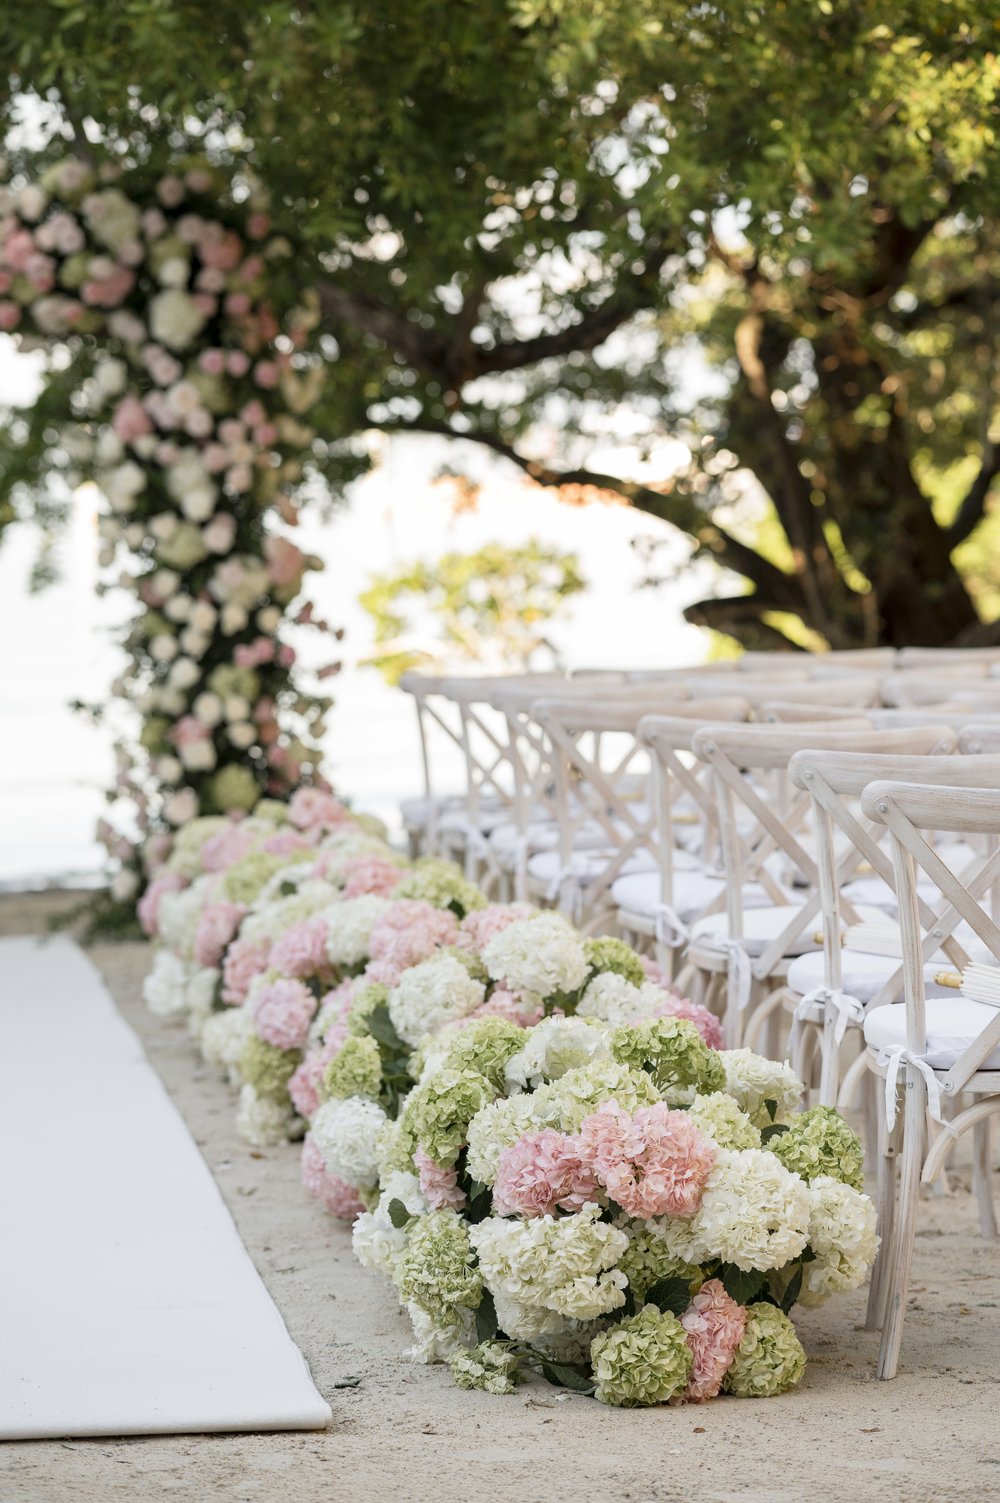 flowers design on a isle of a ceremony  beach wedding